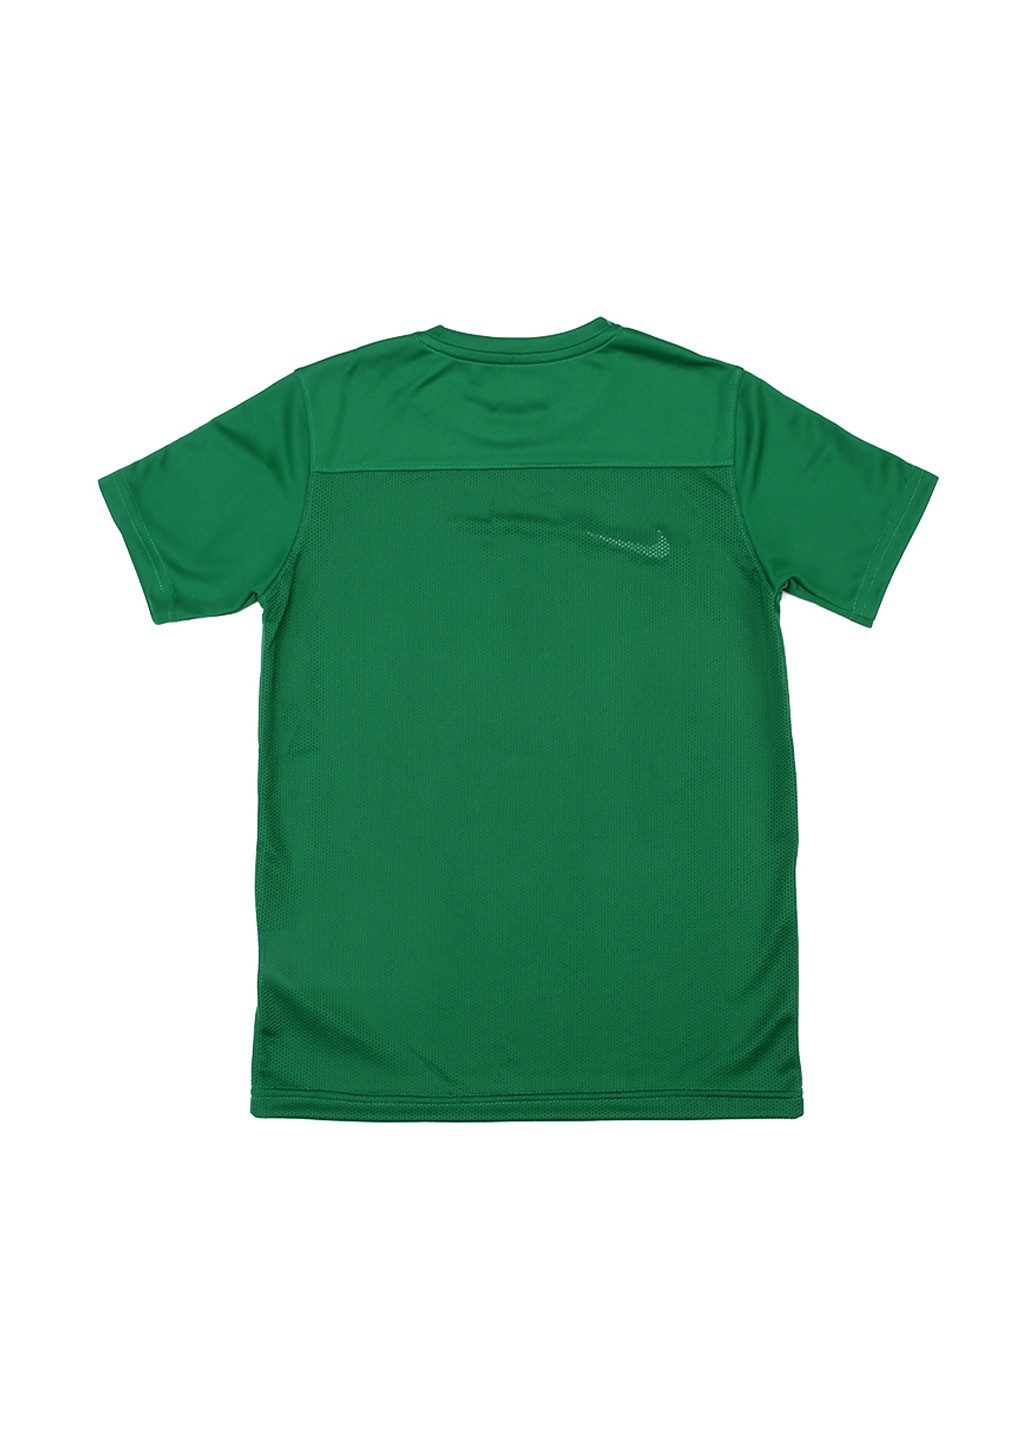 Зеленая демисезонная футболка Nike TRAINING TOP P A R K 1 8